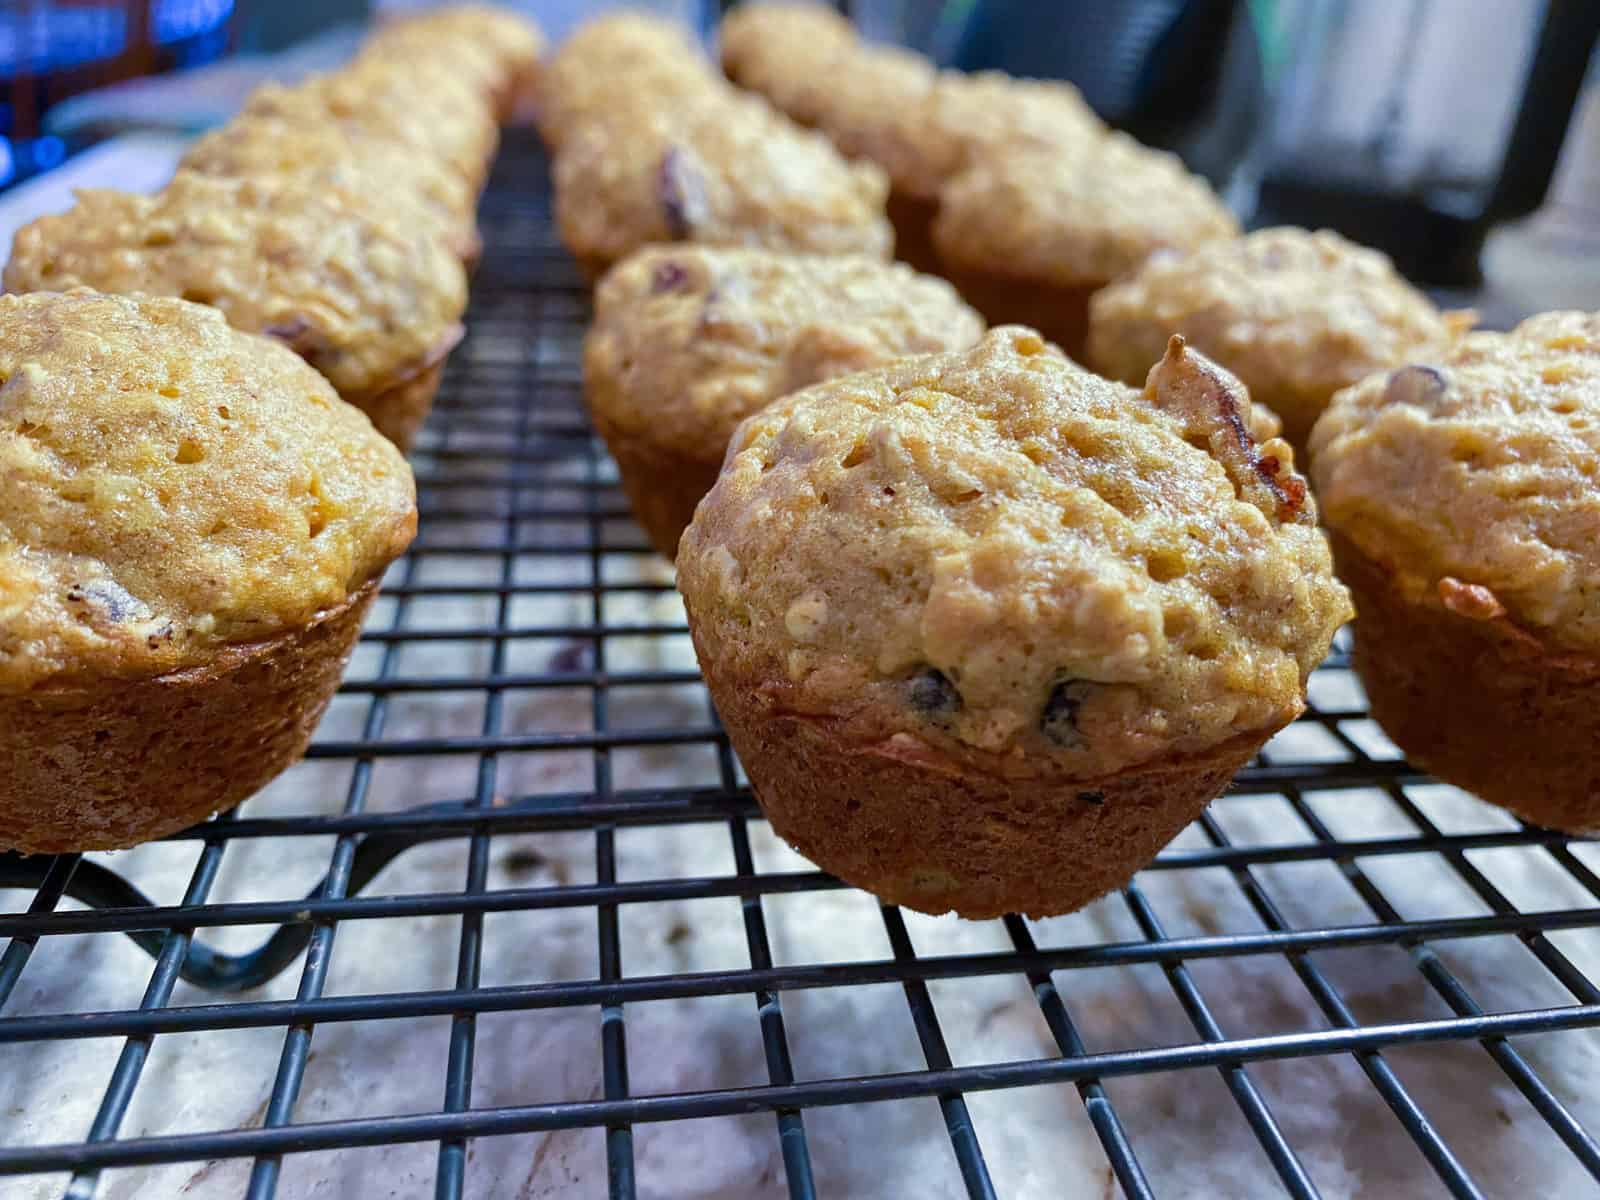 Mini muffins on a cooling rack.